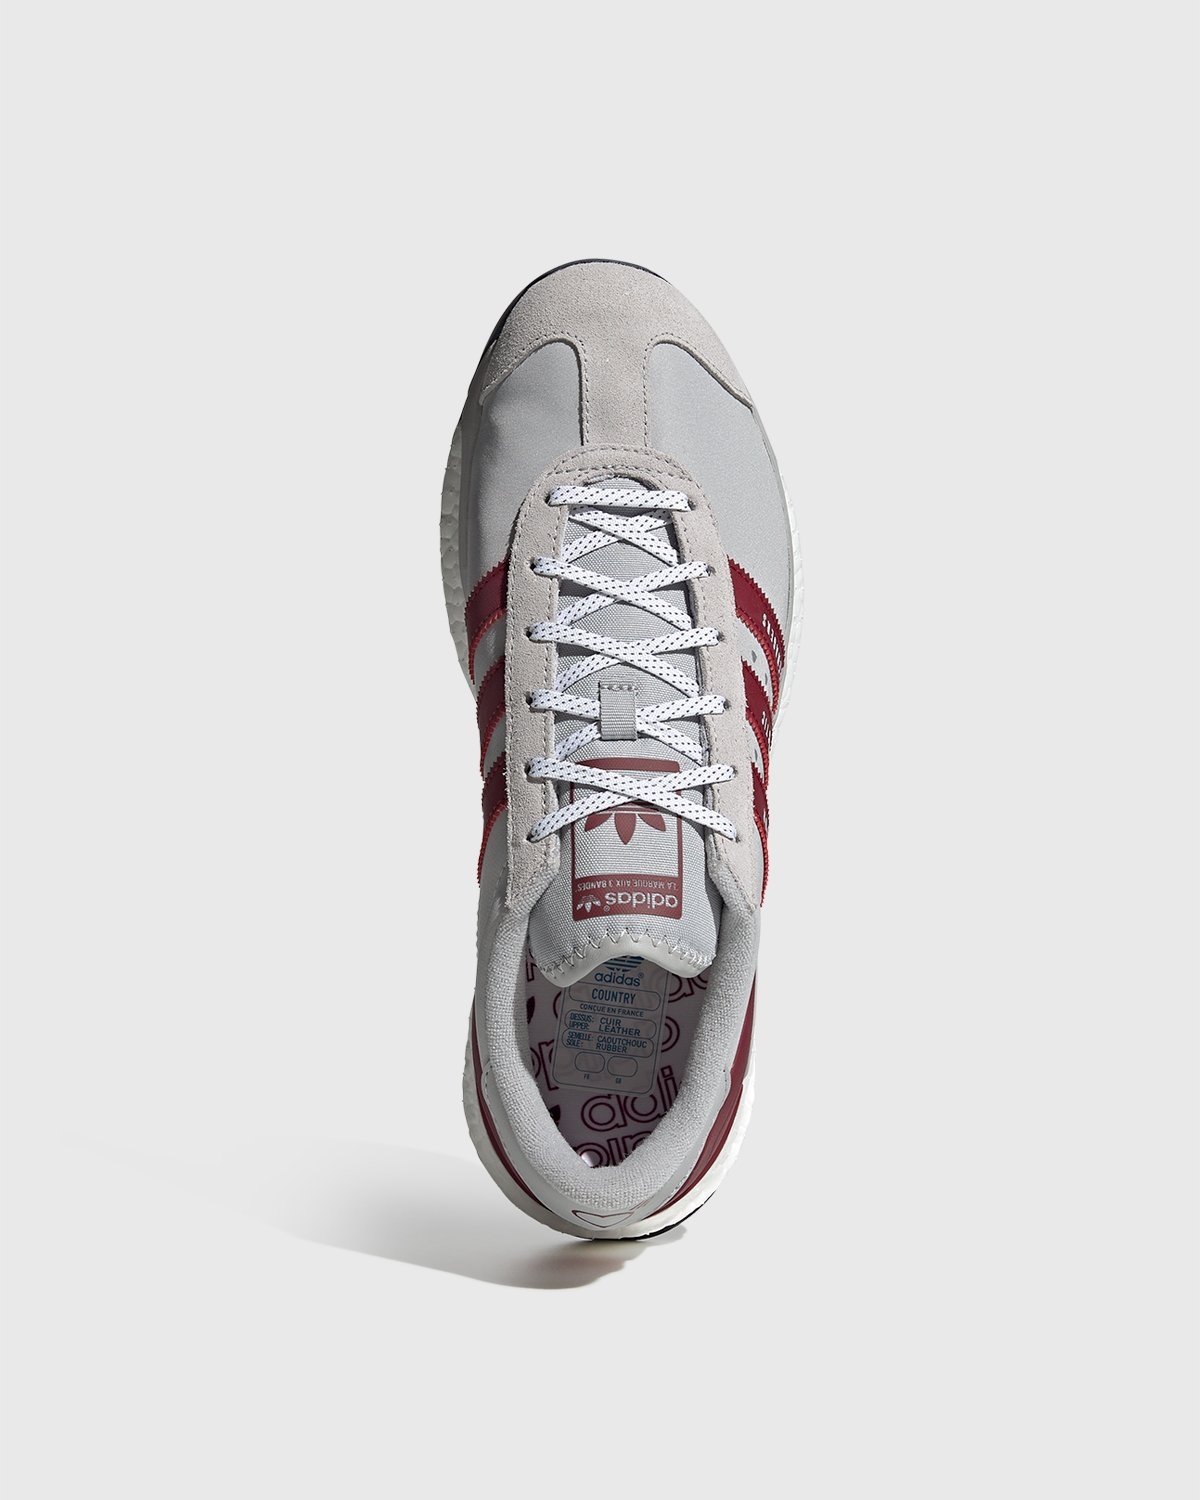 adidas Originals x Human Made – Country Burgundy - Low Top Sneakers - Grey - Image 4